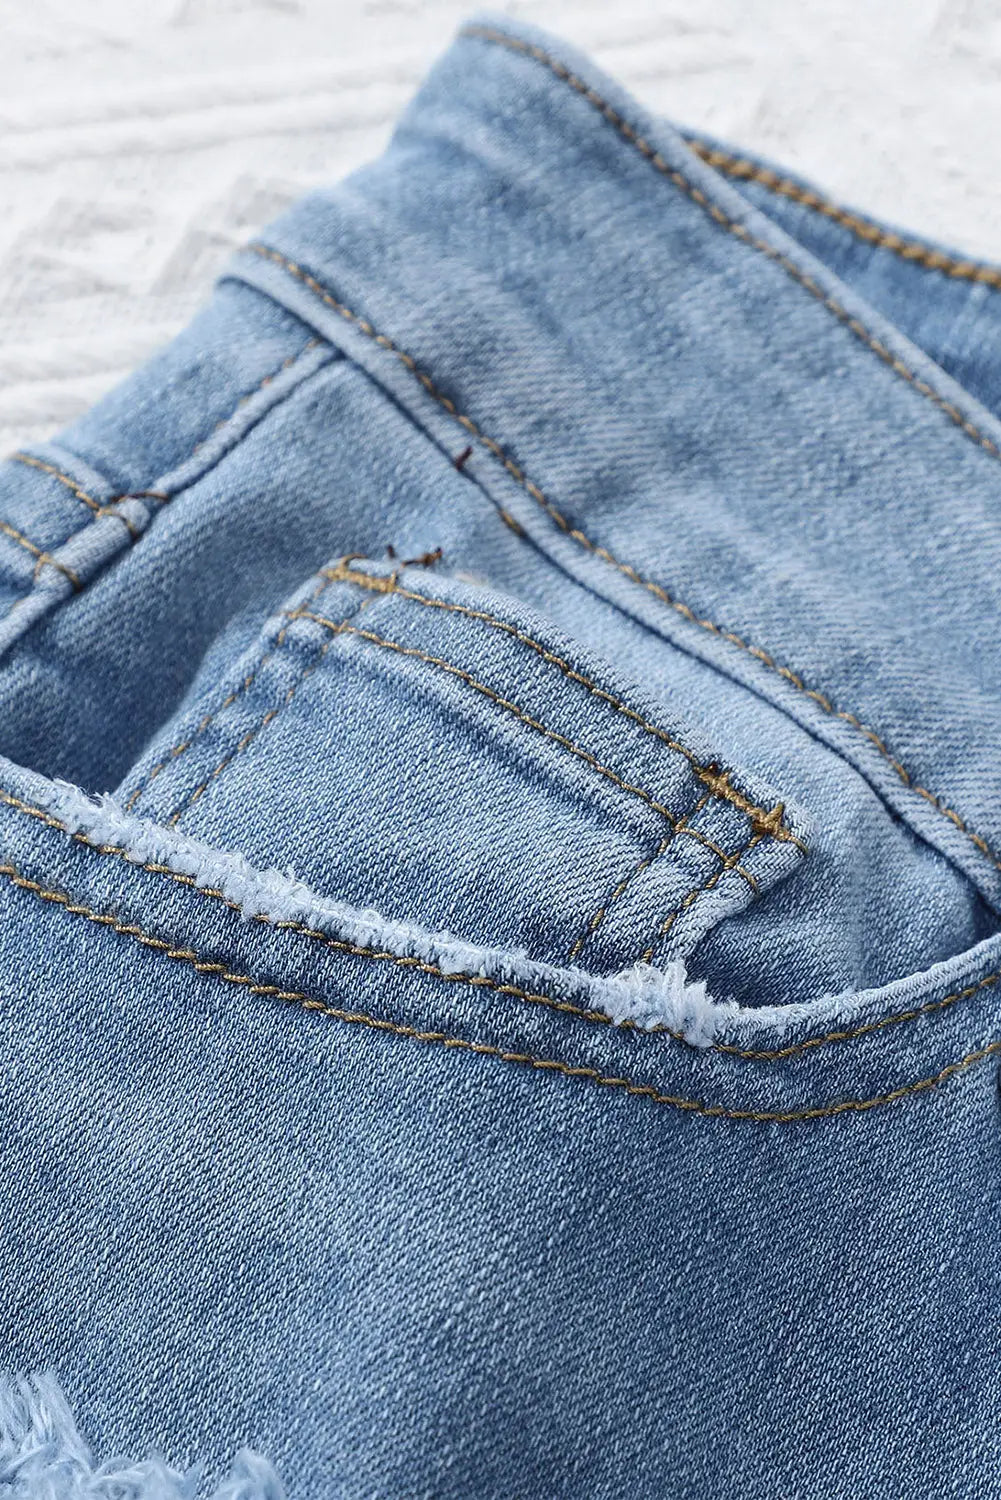 Black distressed boyfriend denim pants - jeans